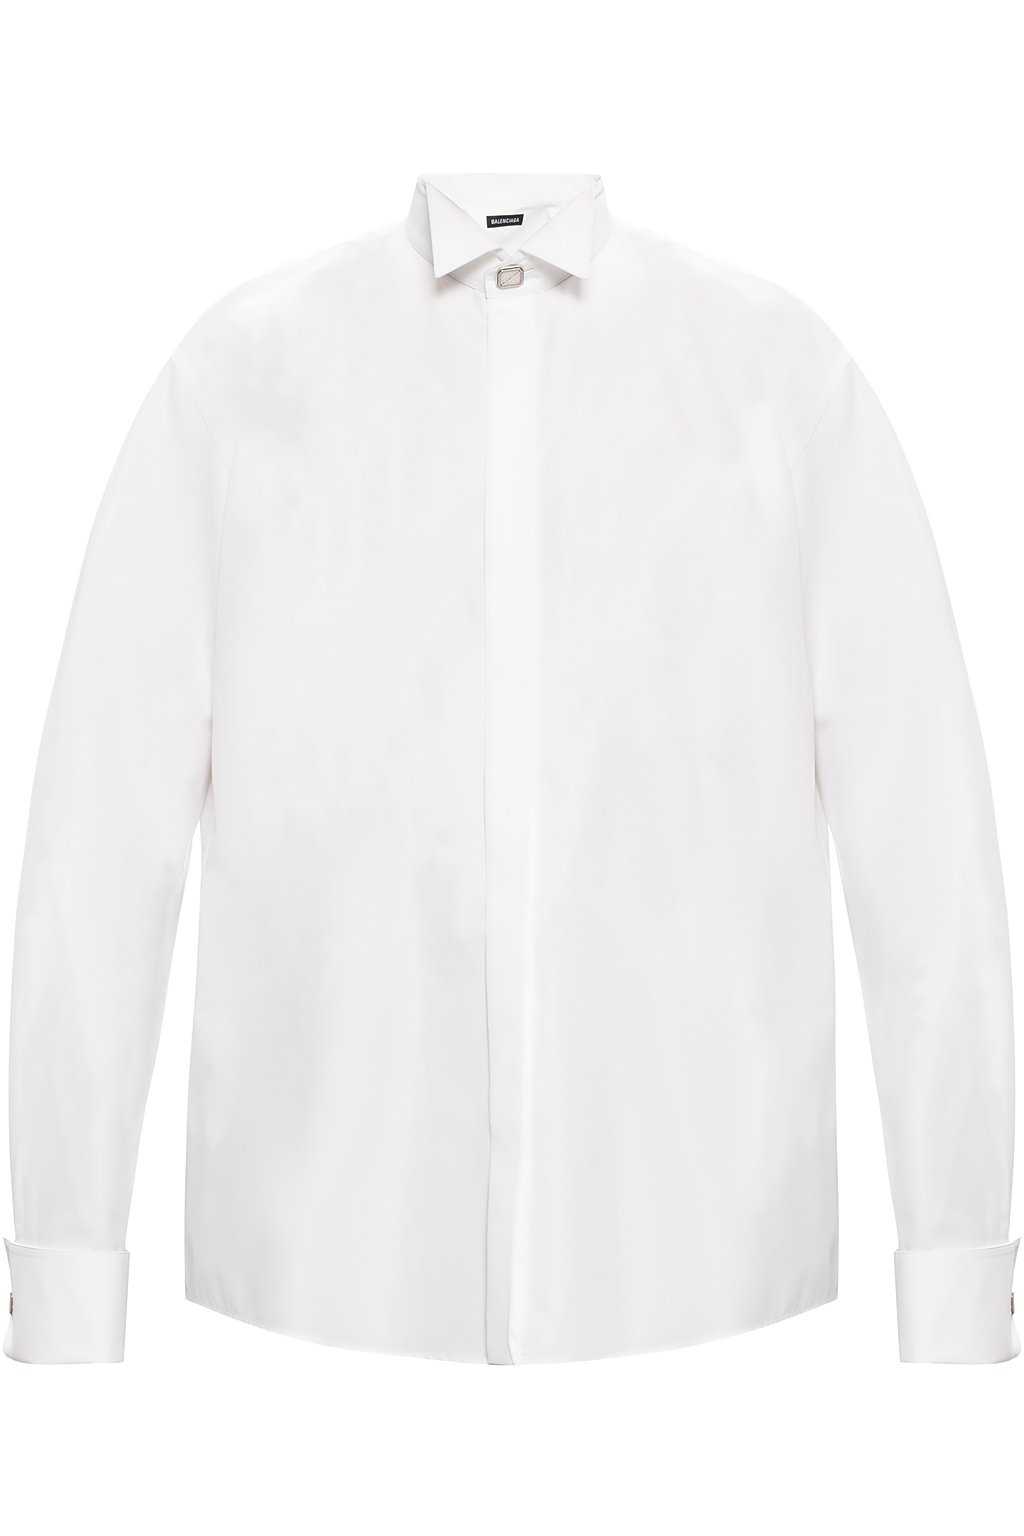 Balenciaga Shirt with concealed placket | Men's Clothing | Vitkac